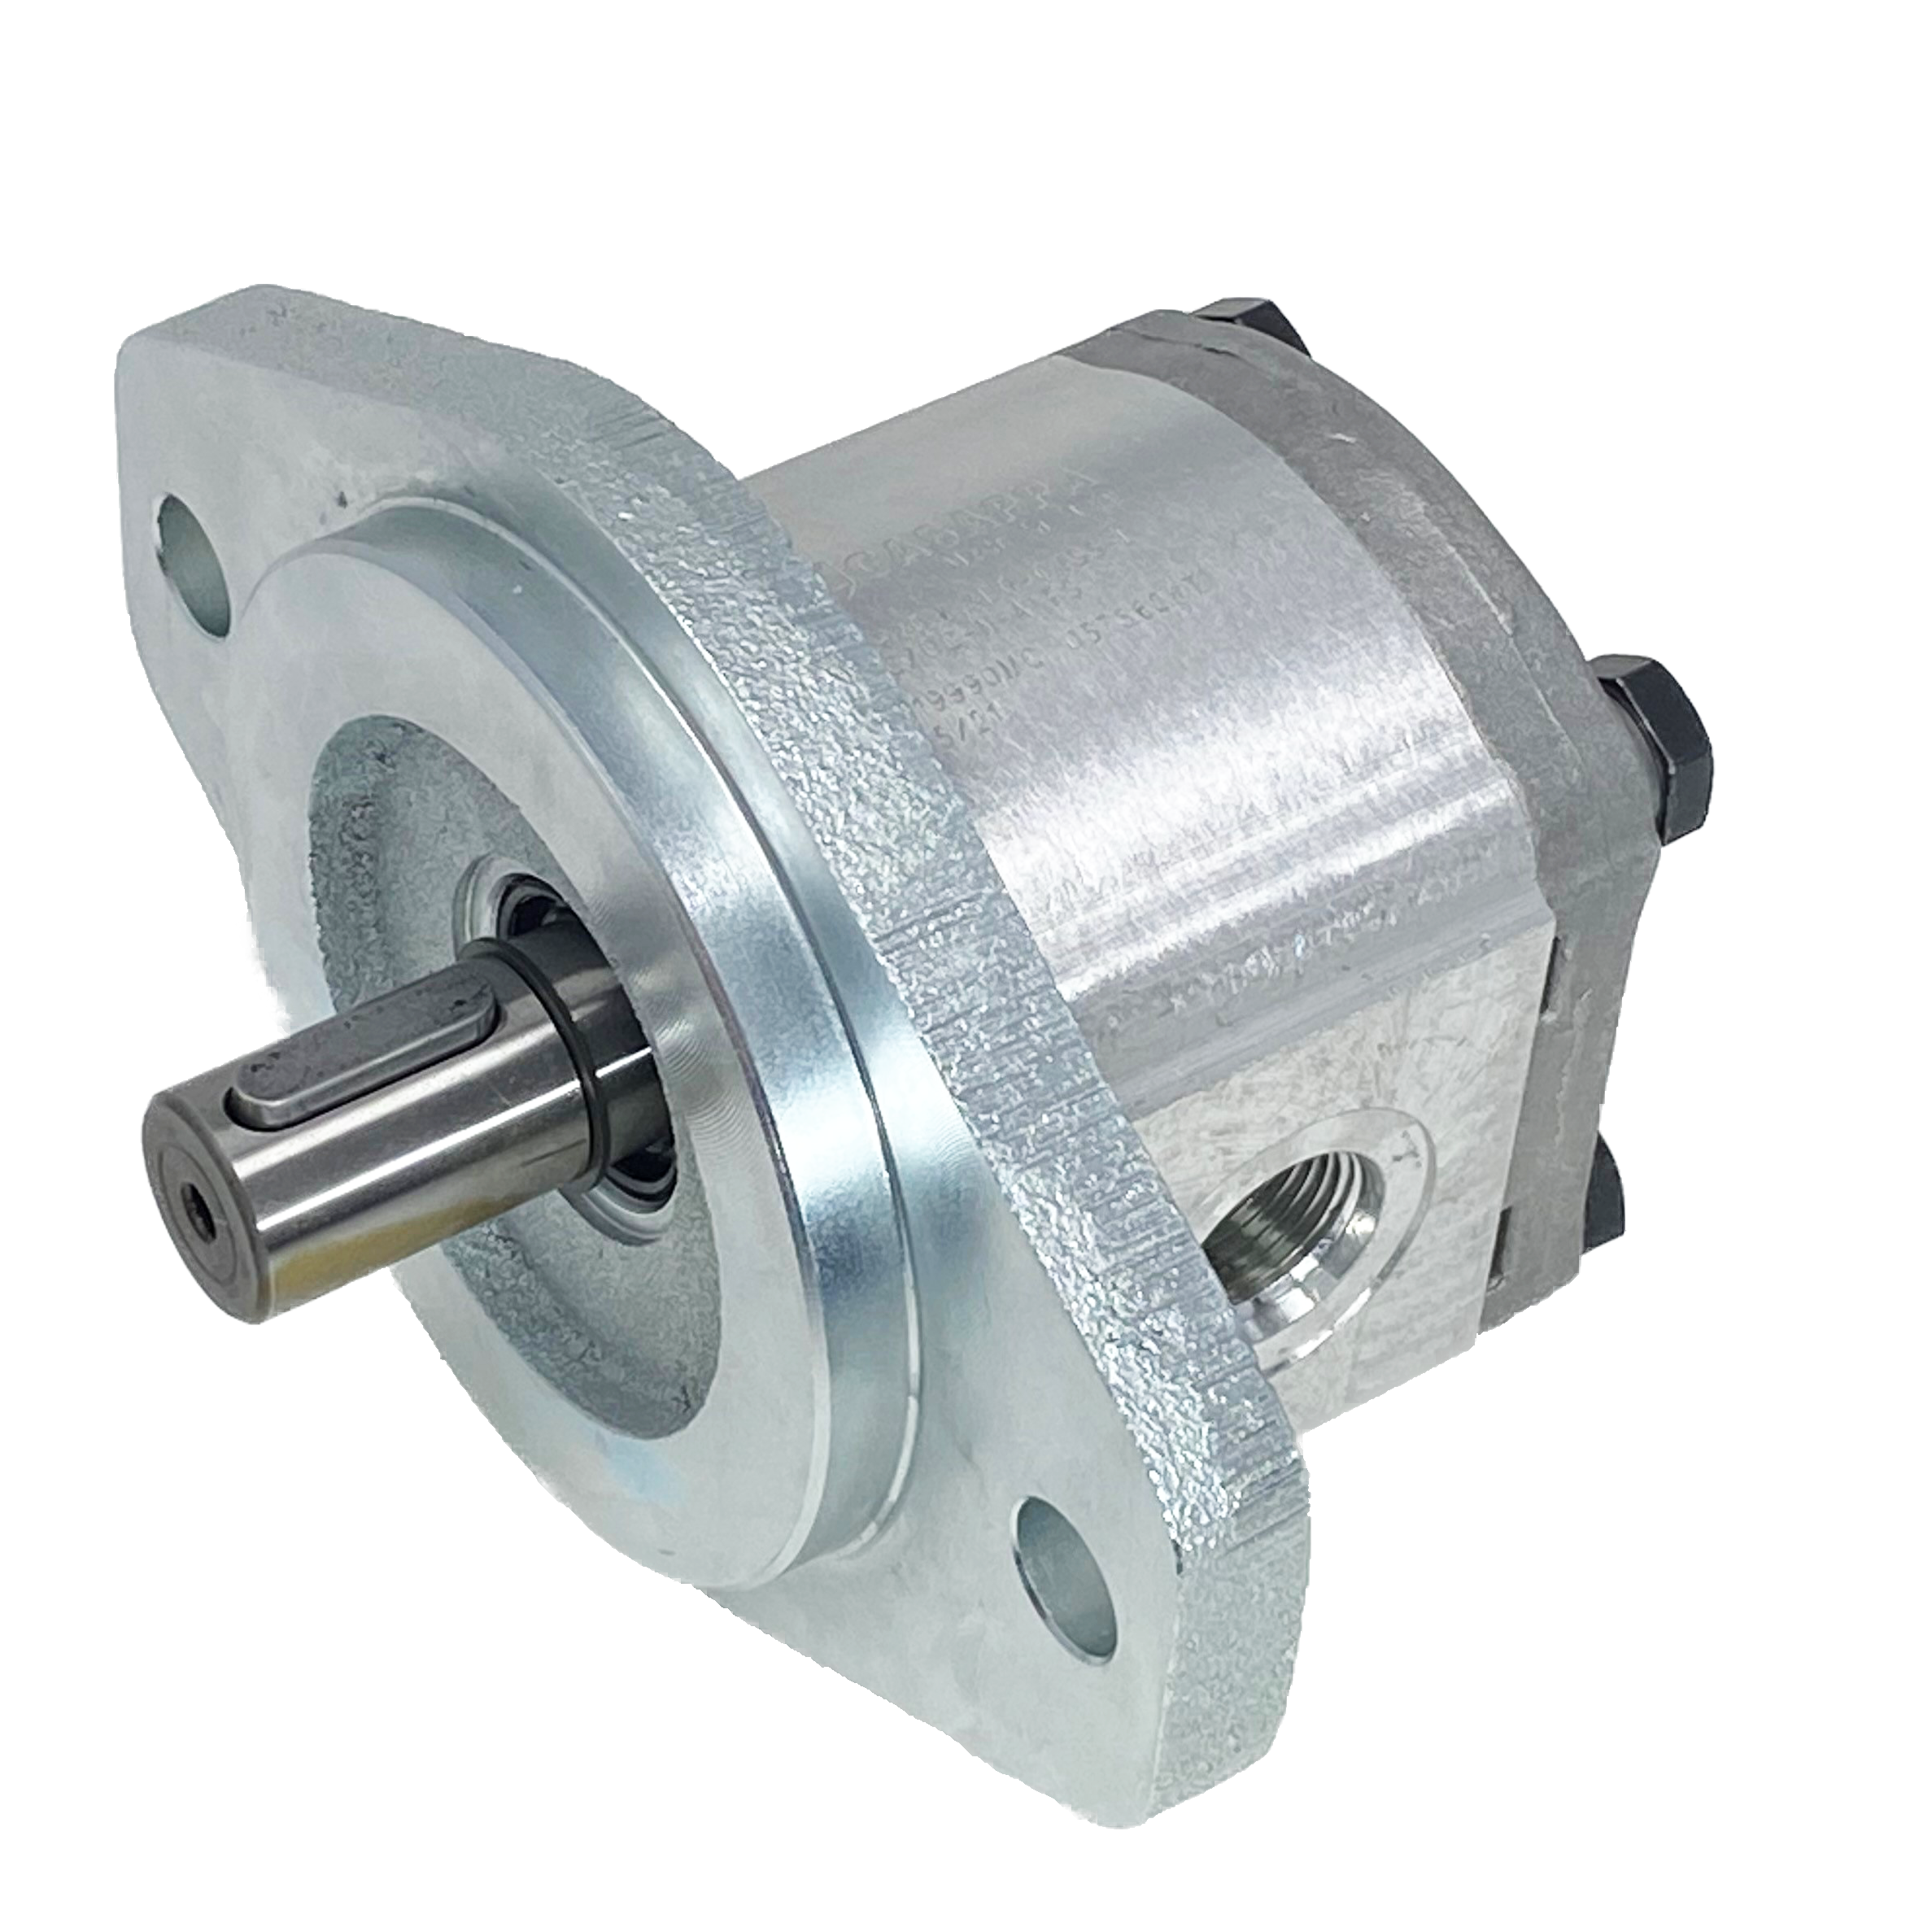 PLM20.9B0-31S1-LOC/OC-N-EL : Casappa Polaris Gear Motor, 9.17cc, 3625psi Rated, 3500RPM, Reversible Interior Drain, 5/8" Bore x 5/32" Key Shaft, SAE A 2-Bolt Flange, 0.625 (5/8") #10 SAE Inlet, 0.625 (5/8") #10 SAE Outlet, Aluminum Body & Flange